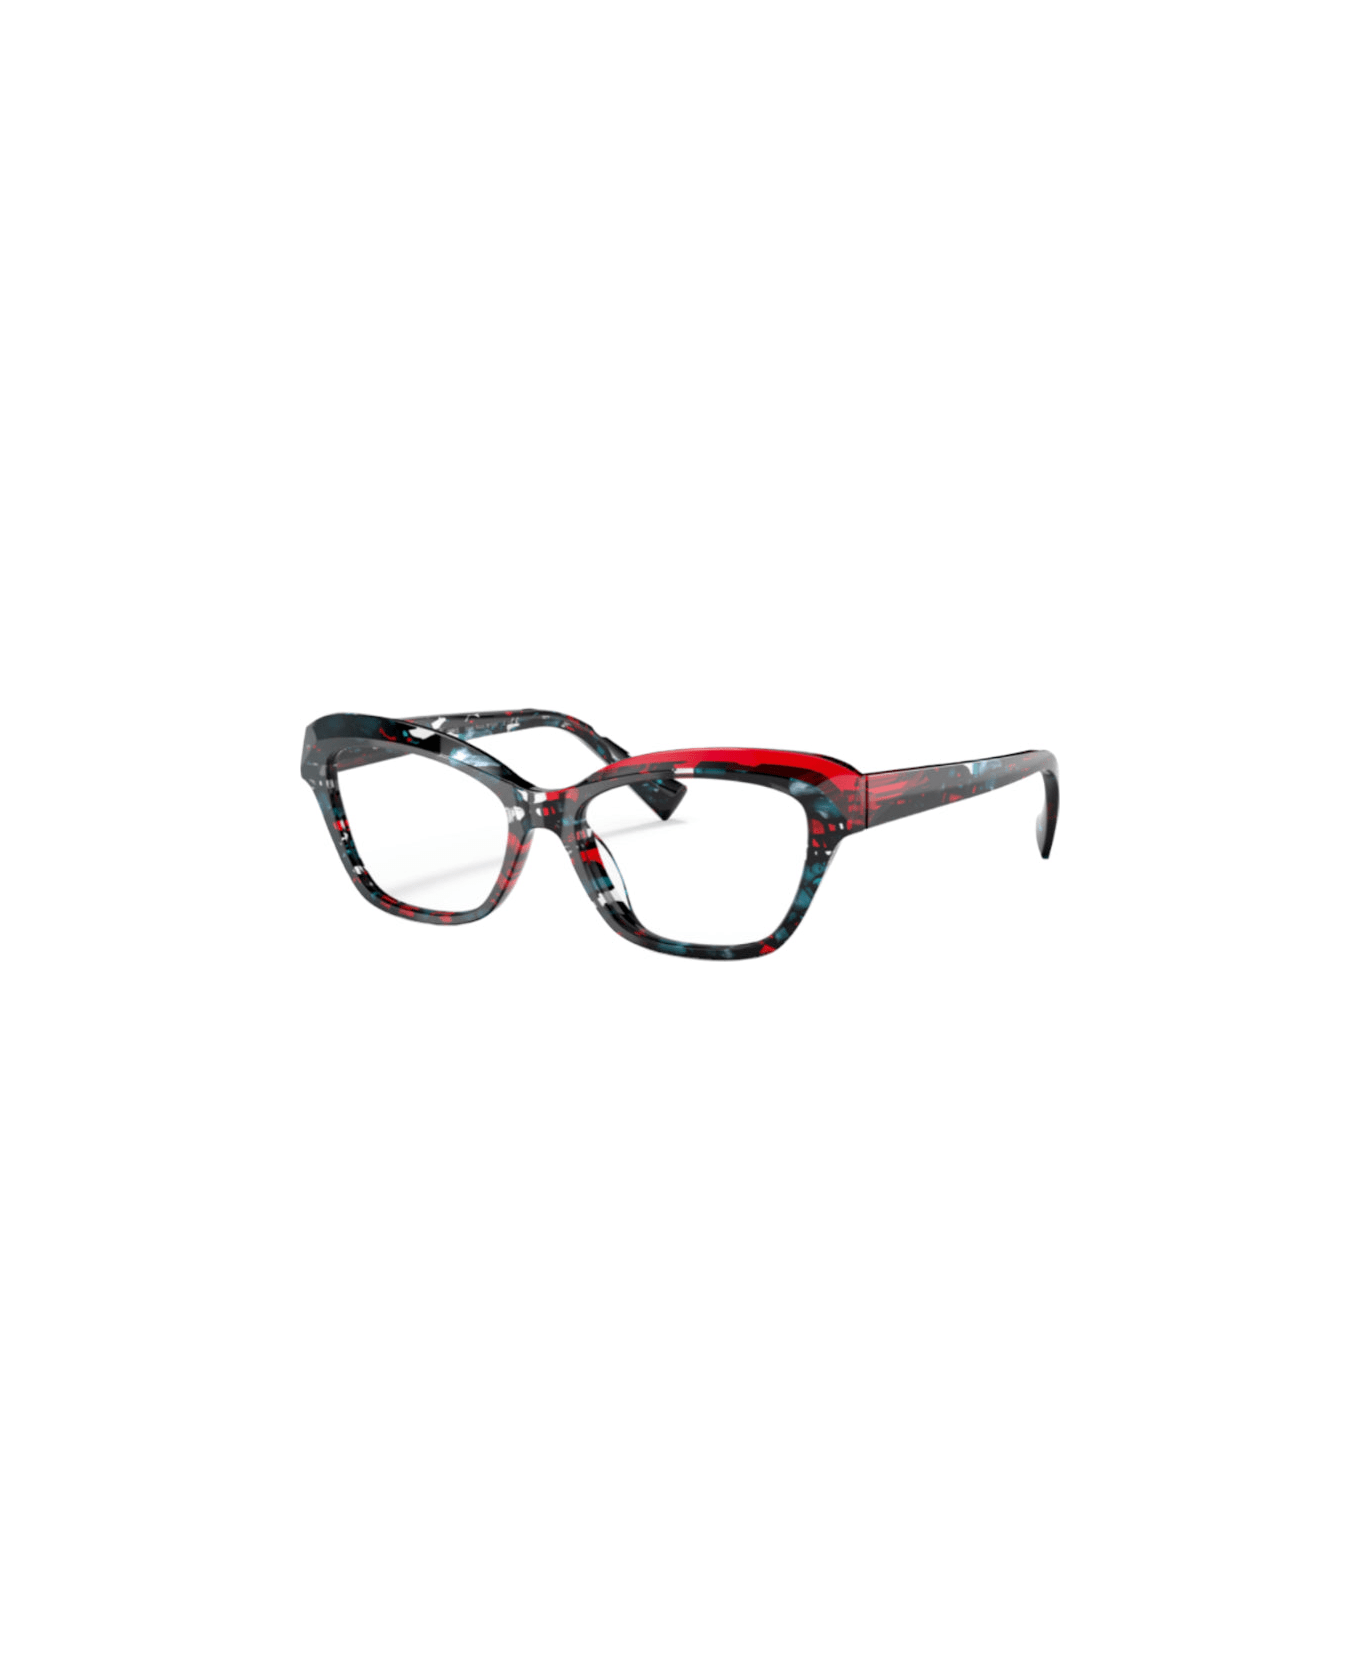 Alain Mikli Sephine - 3147 - Red/blue Glasses